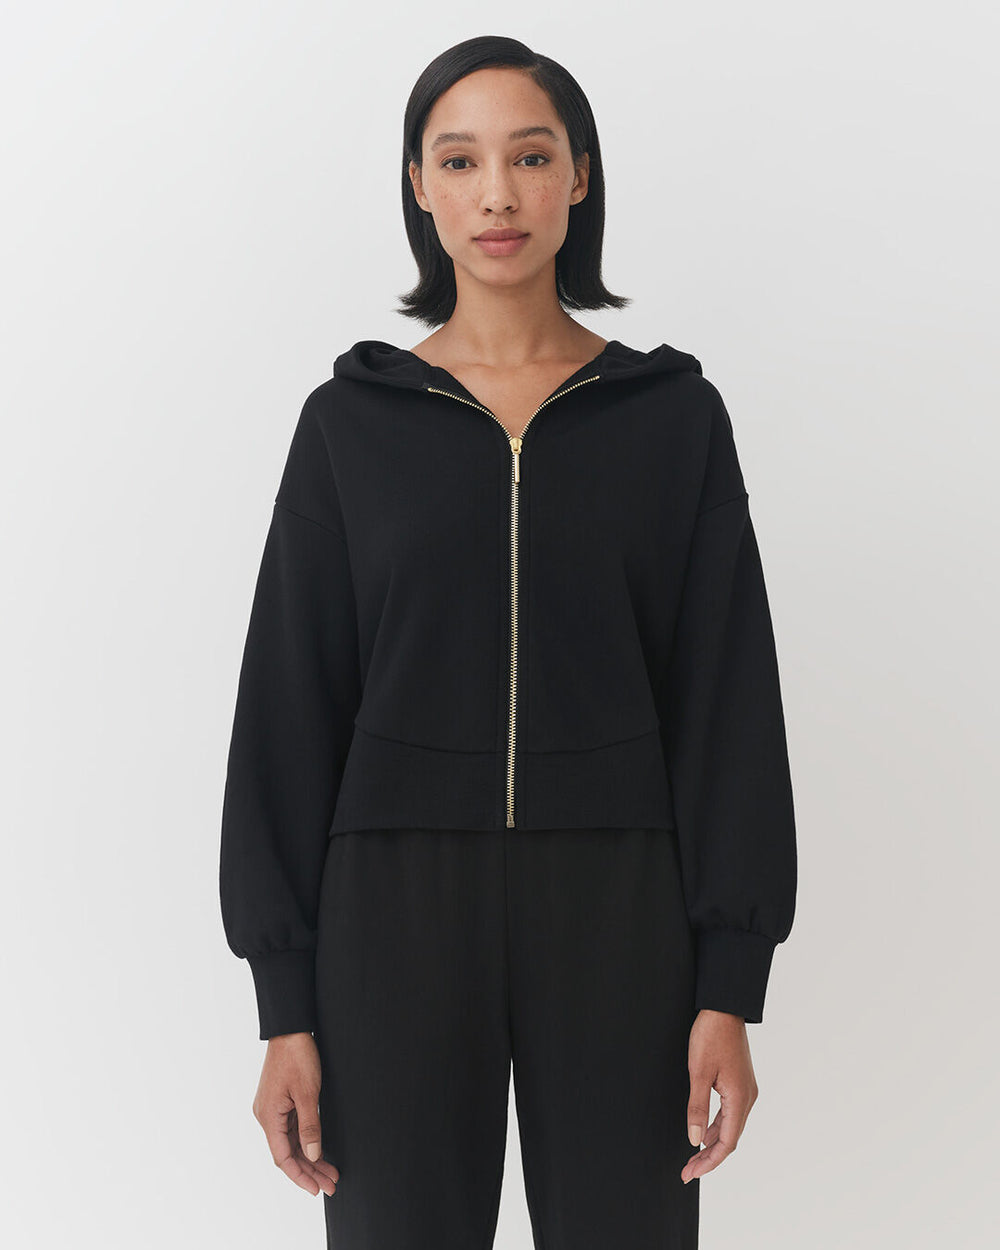 Woman standing in zip-up hoodie and pants, facing camera.